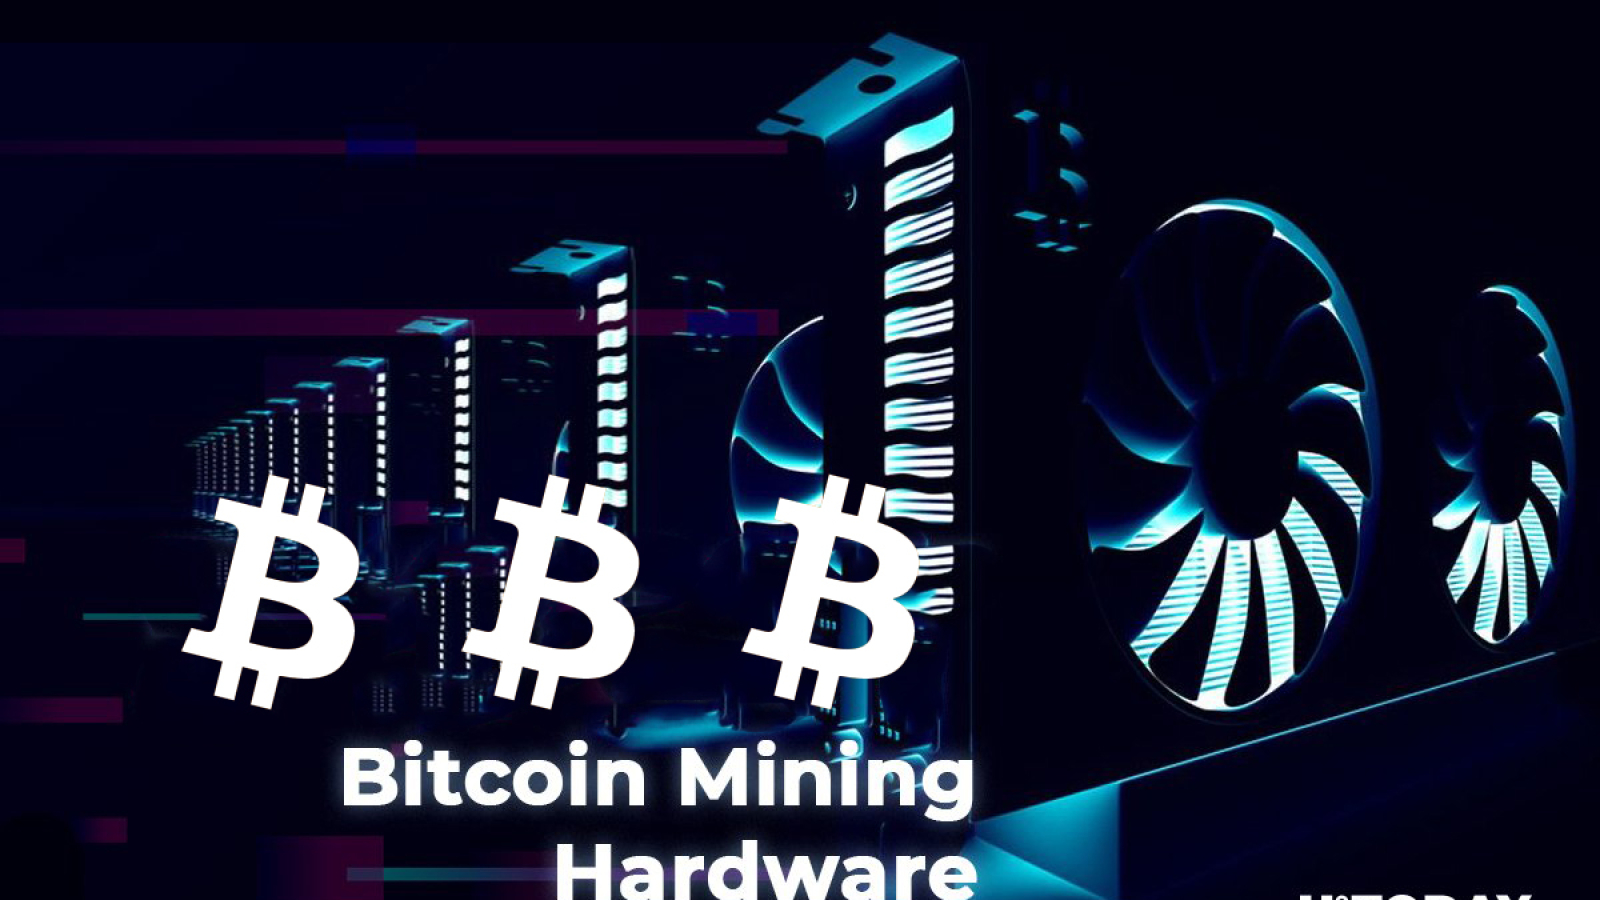 Bitcoin Mining Hardware 2018